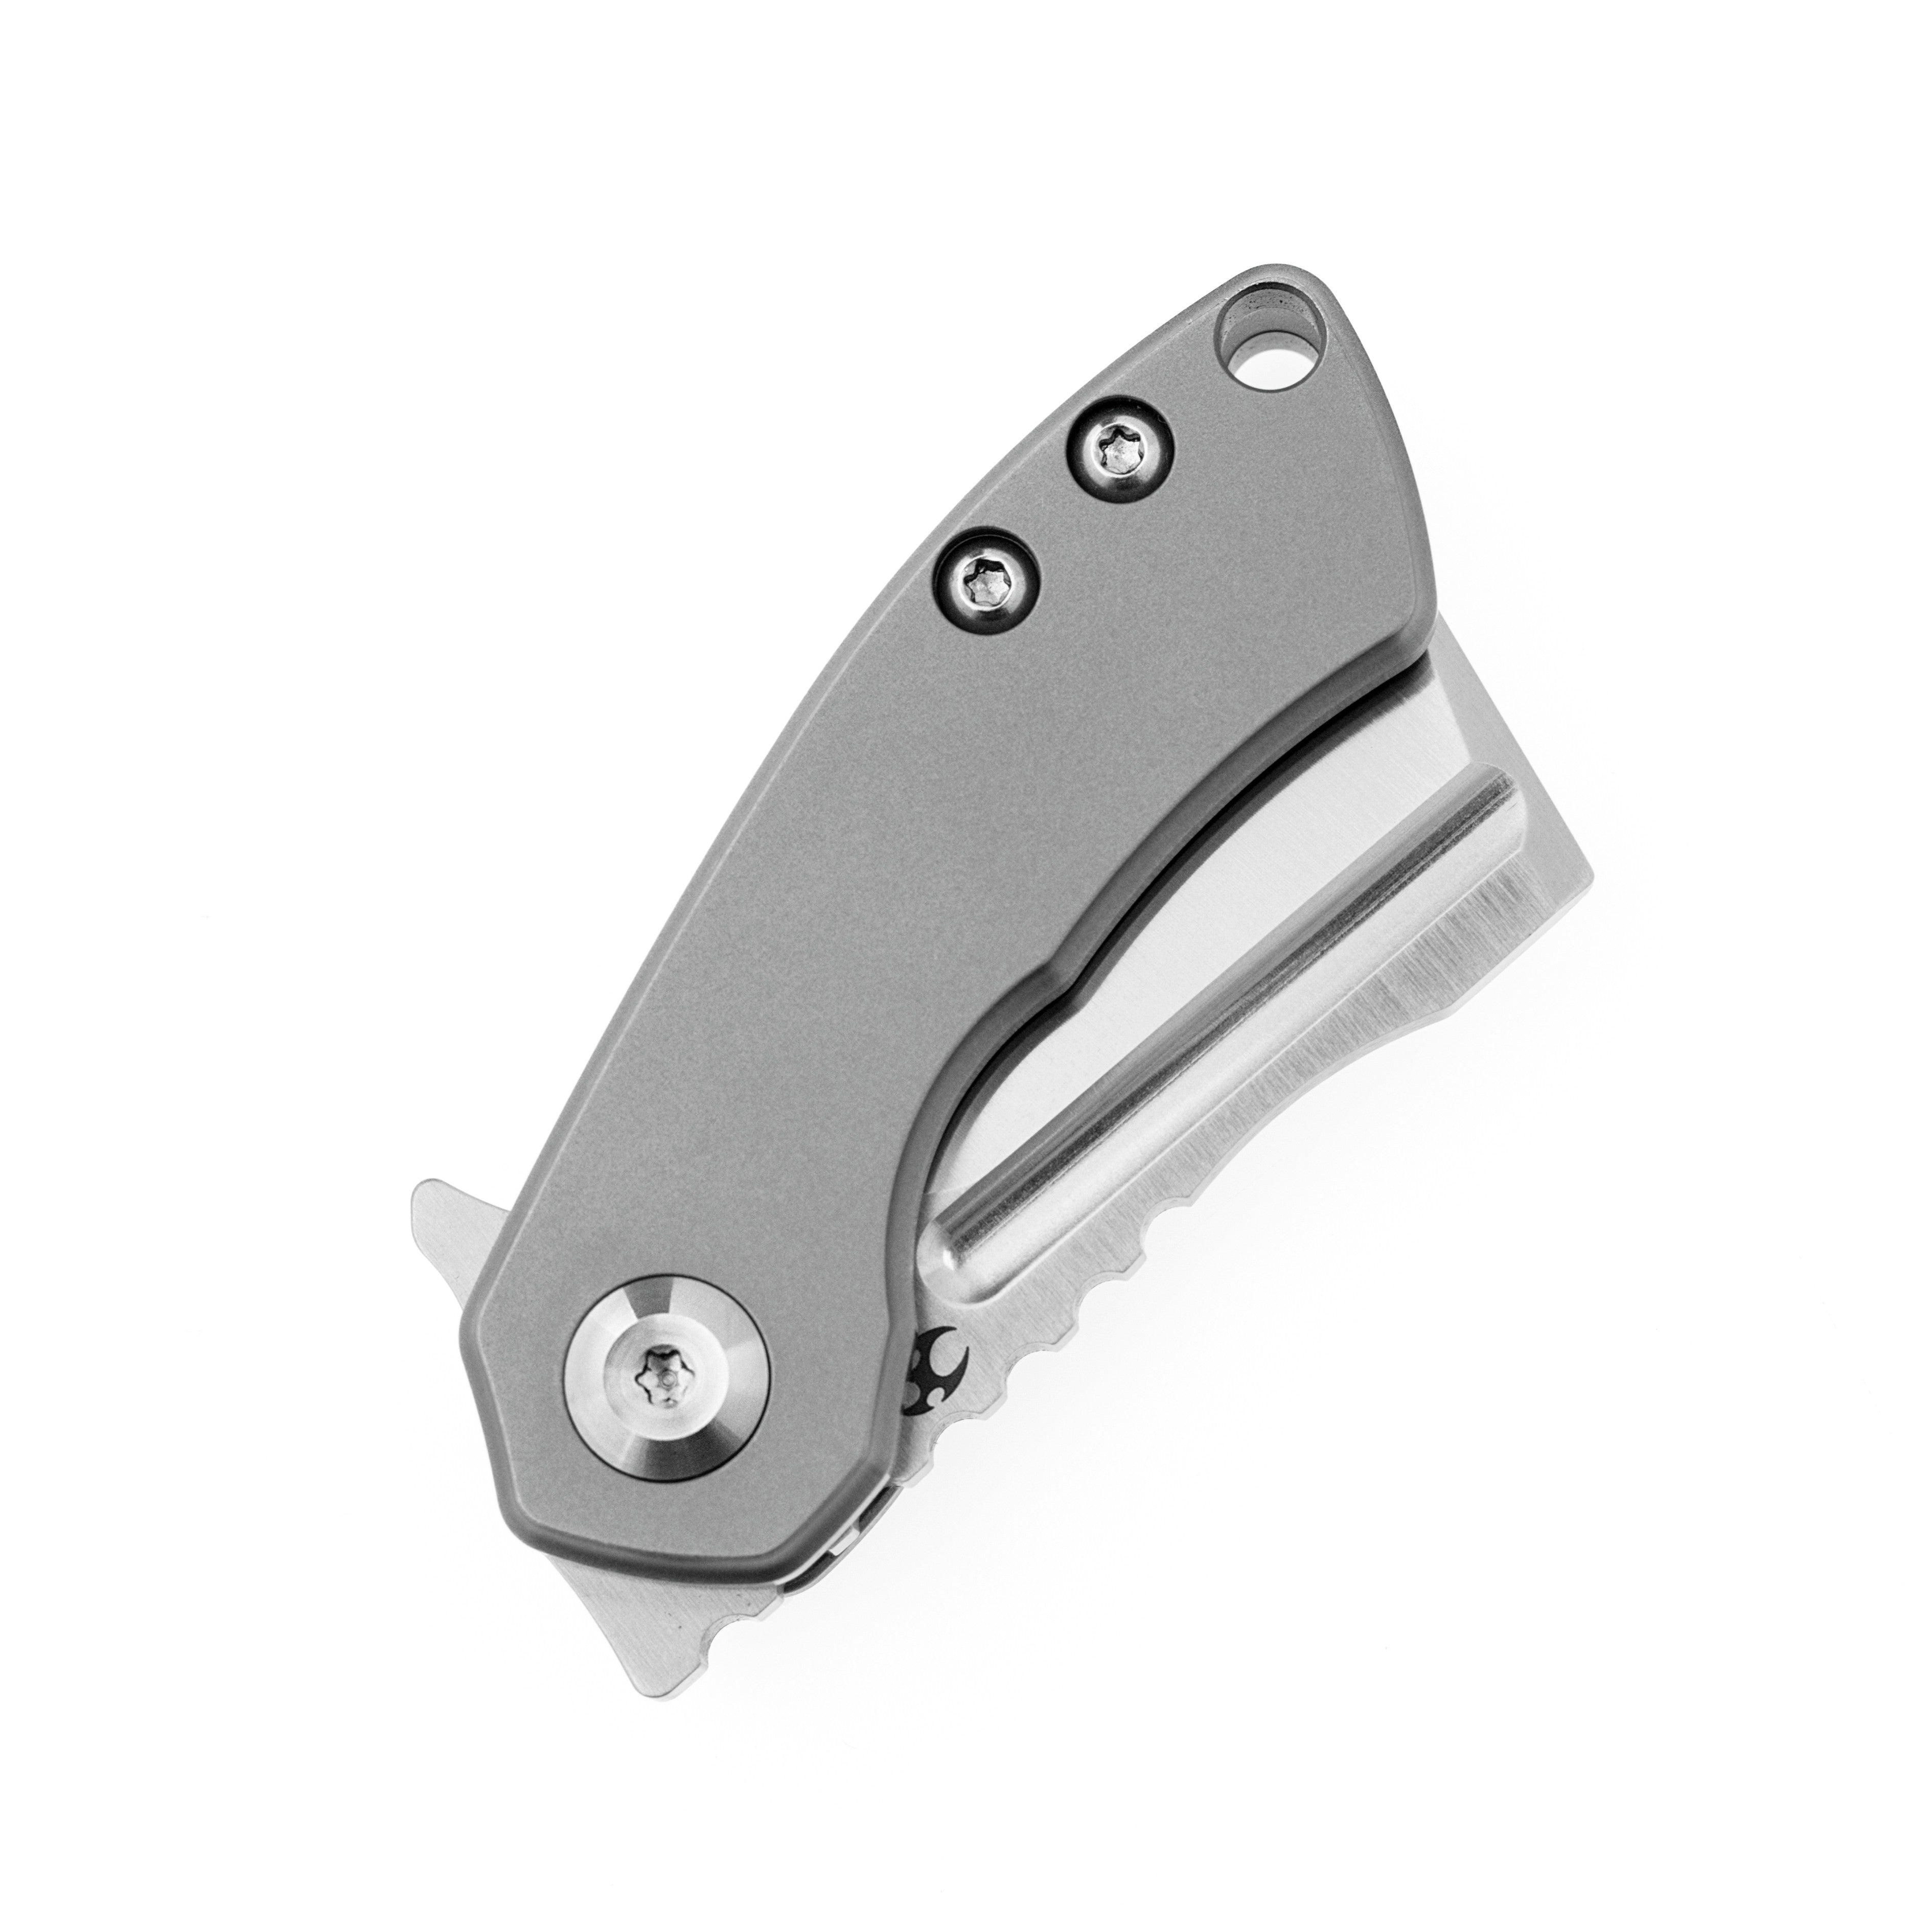 Kansept 刀具 Mini Korvid K3030A2 S35VN 刀片钛手柄框架锁